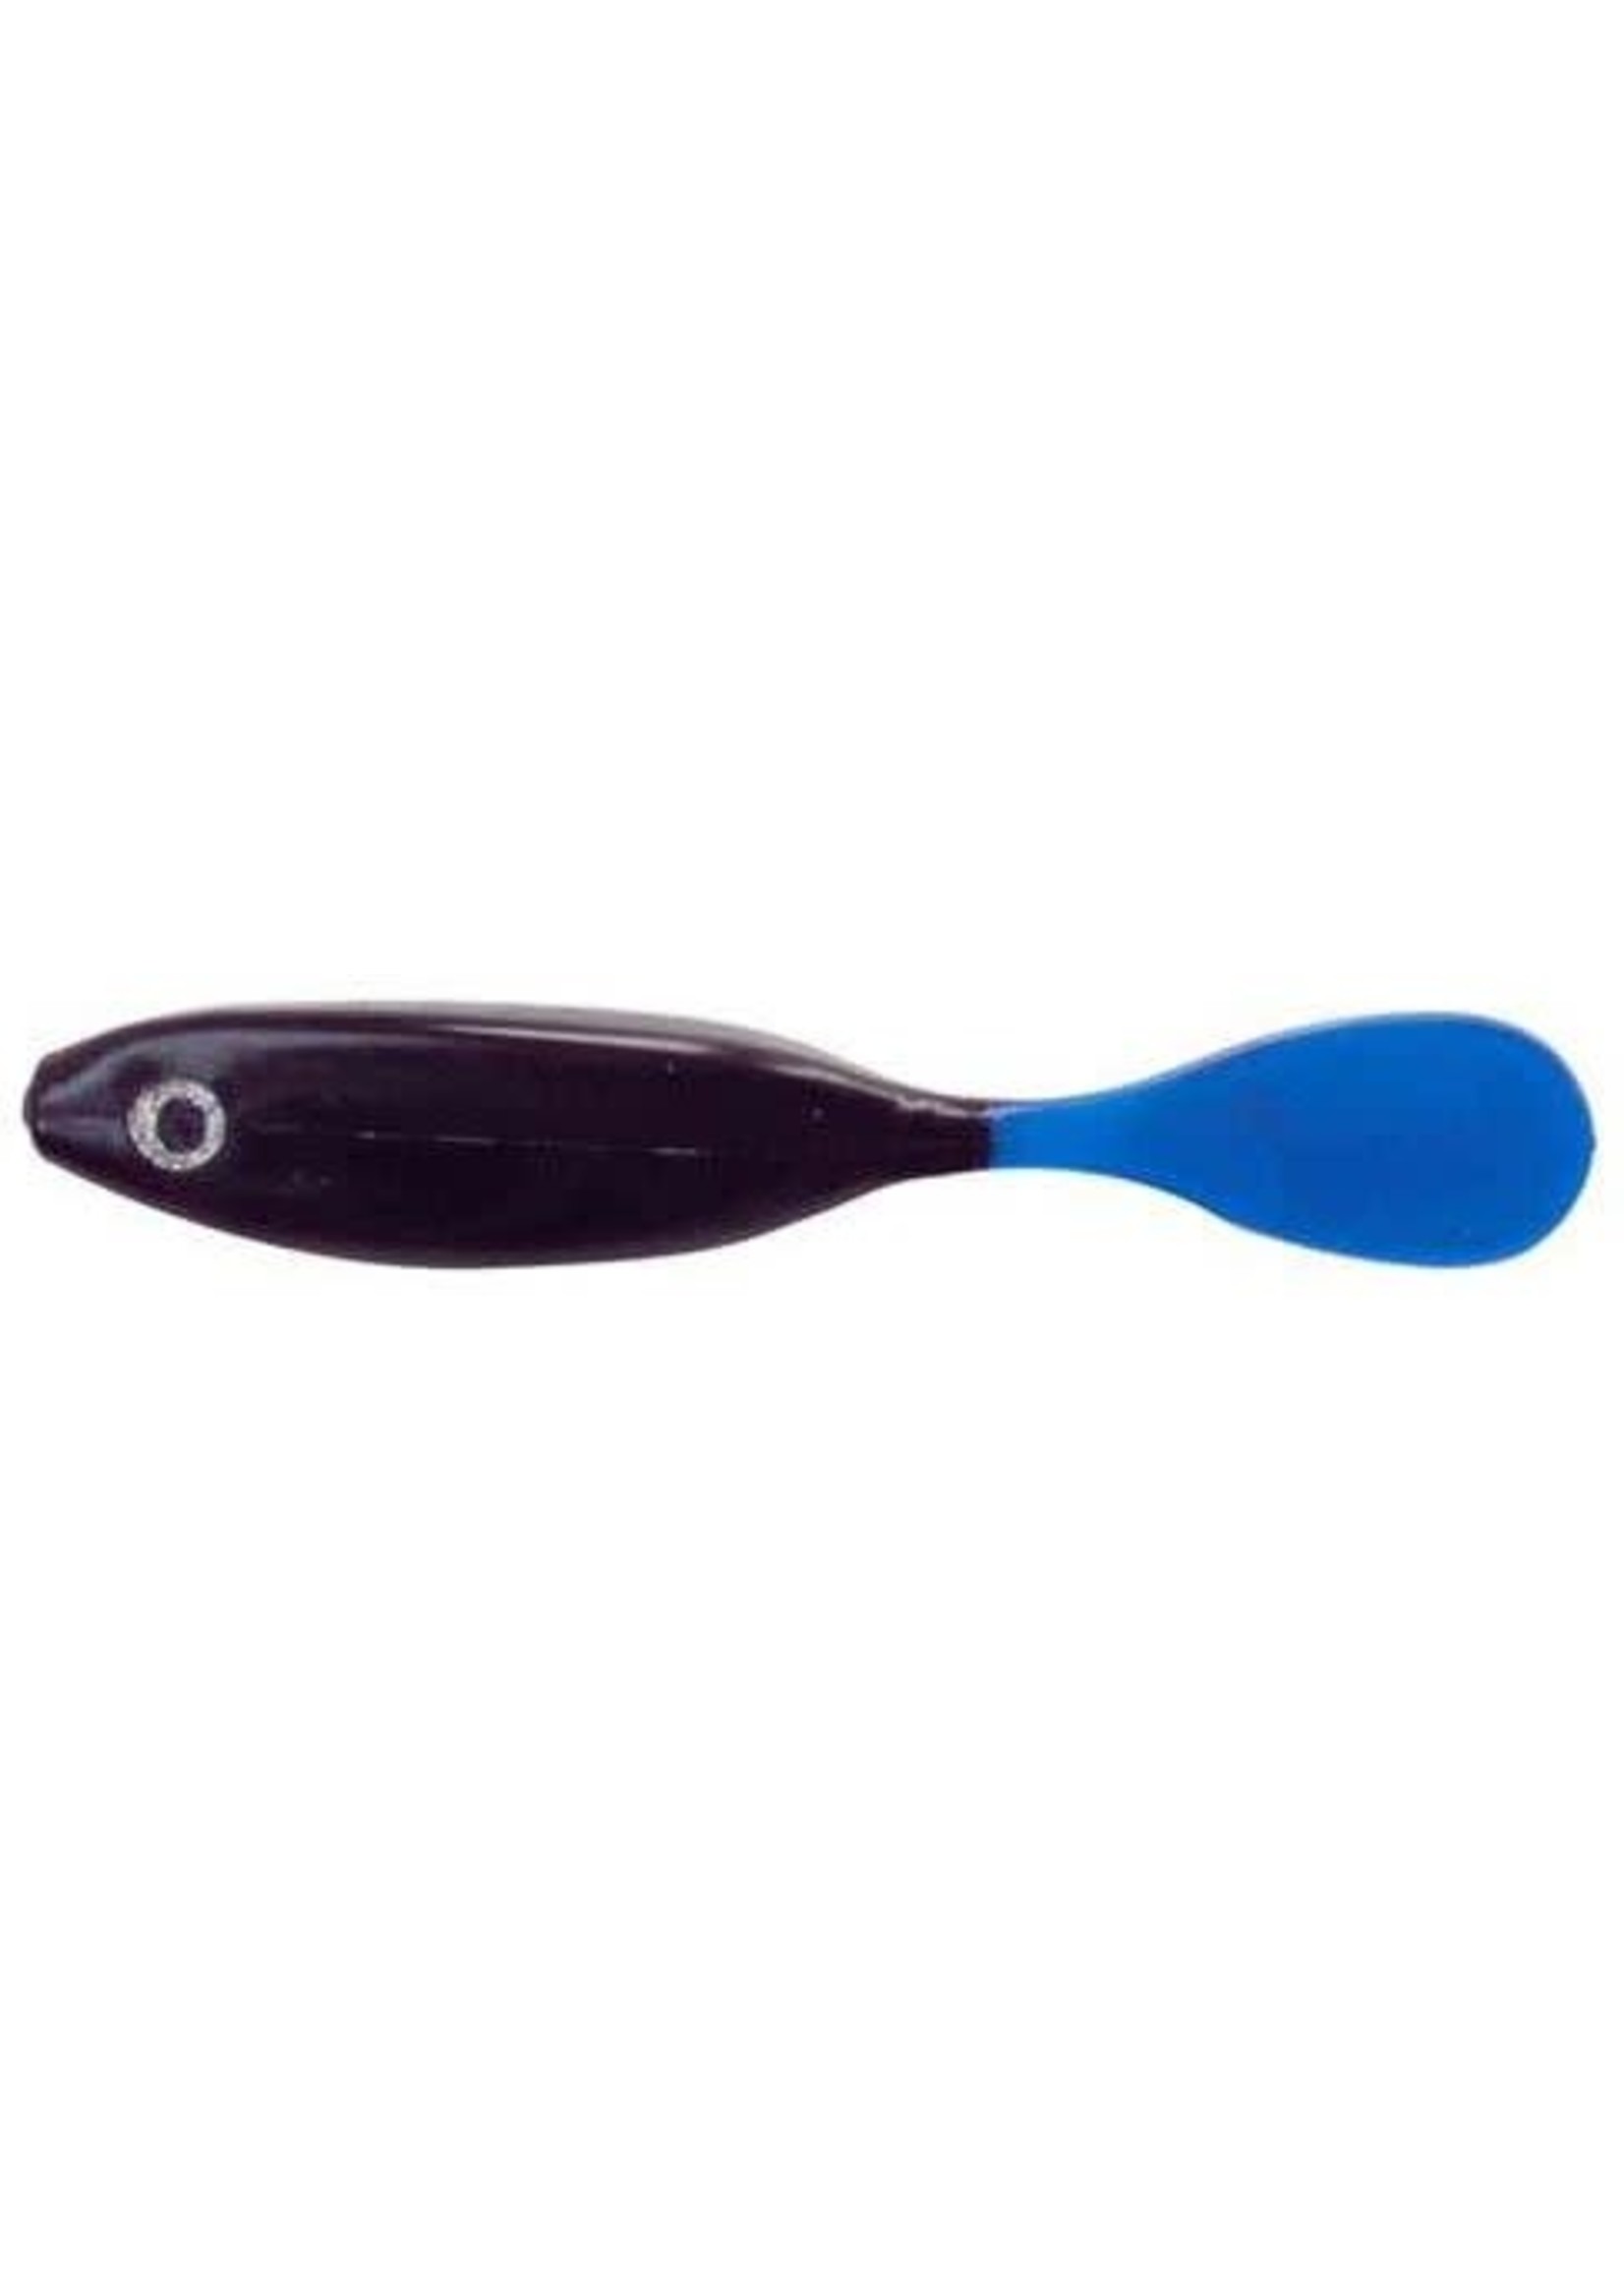 DOA C.A.L. Airhead Paddle Tail - Black / Blue